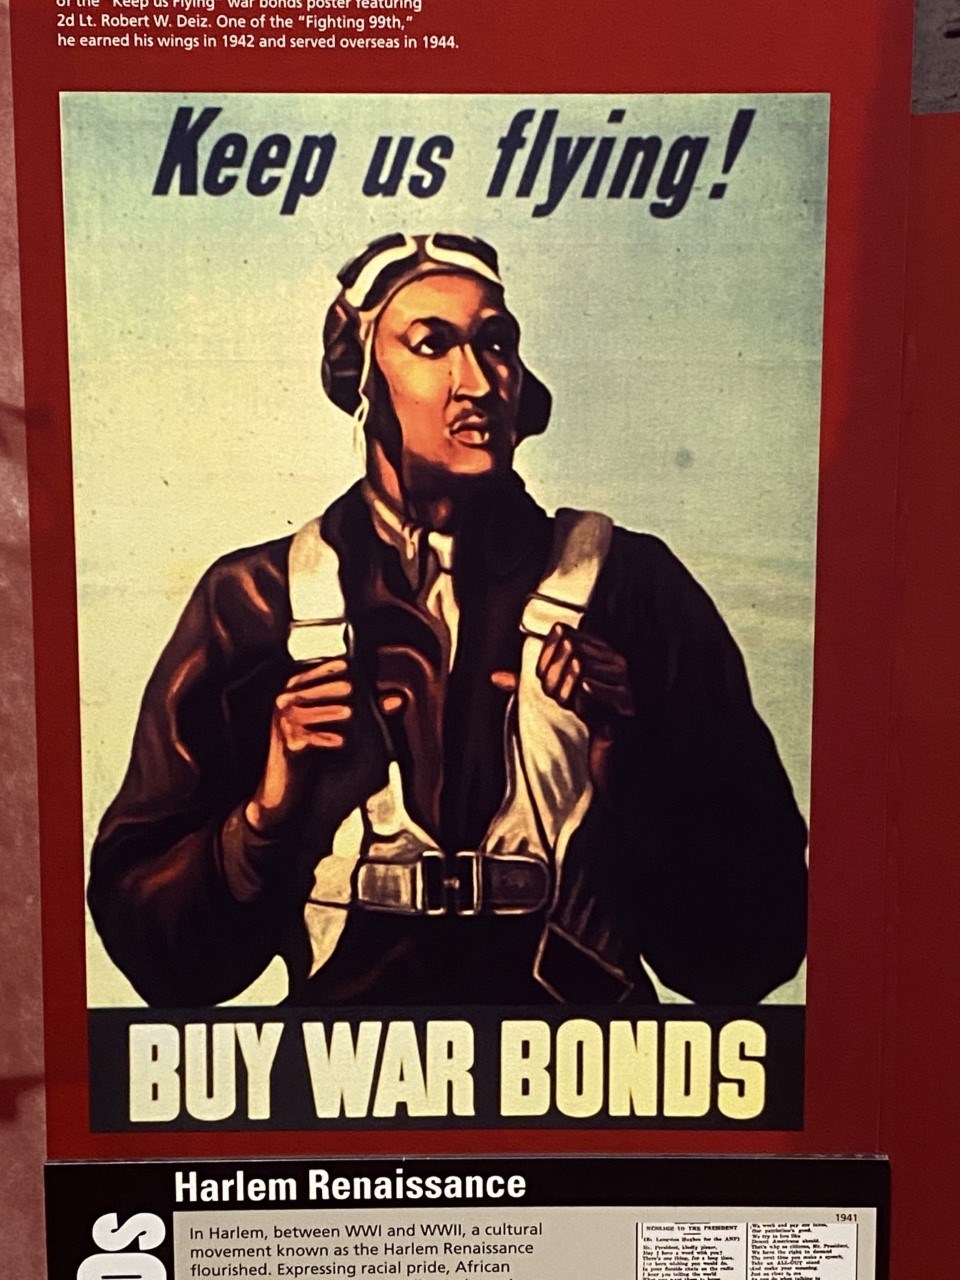 WWII propaganda poster. "Keep us fling! BUY WAR BONDS"